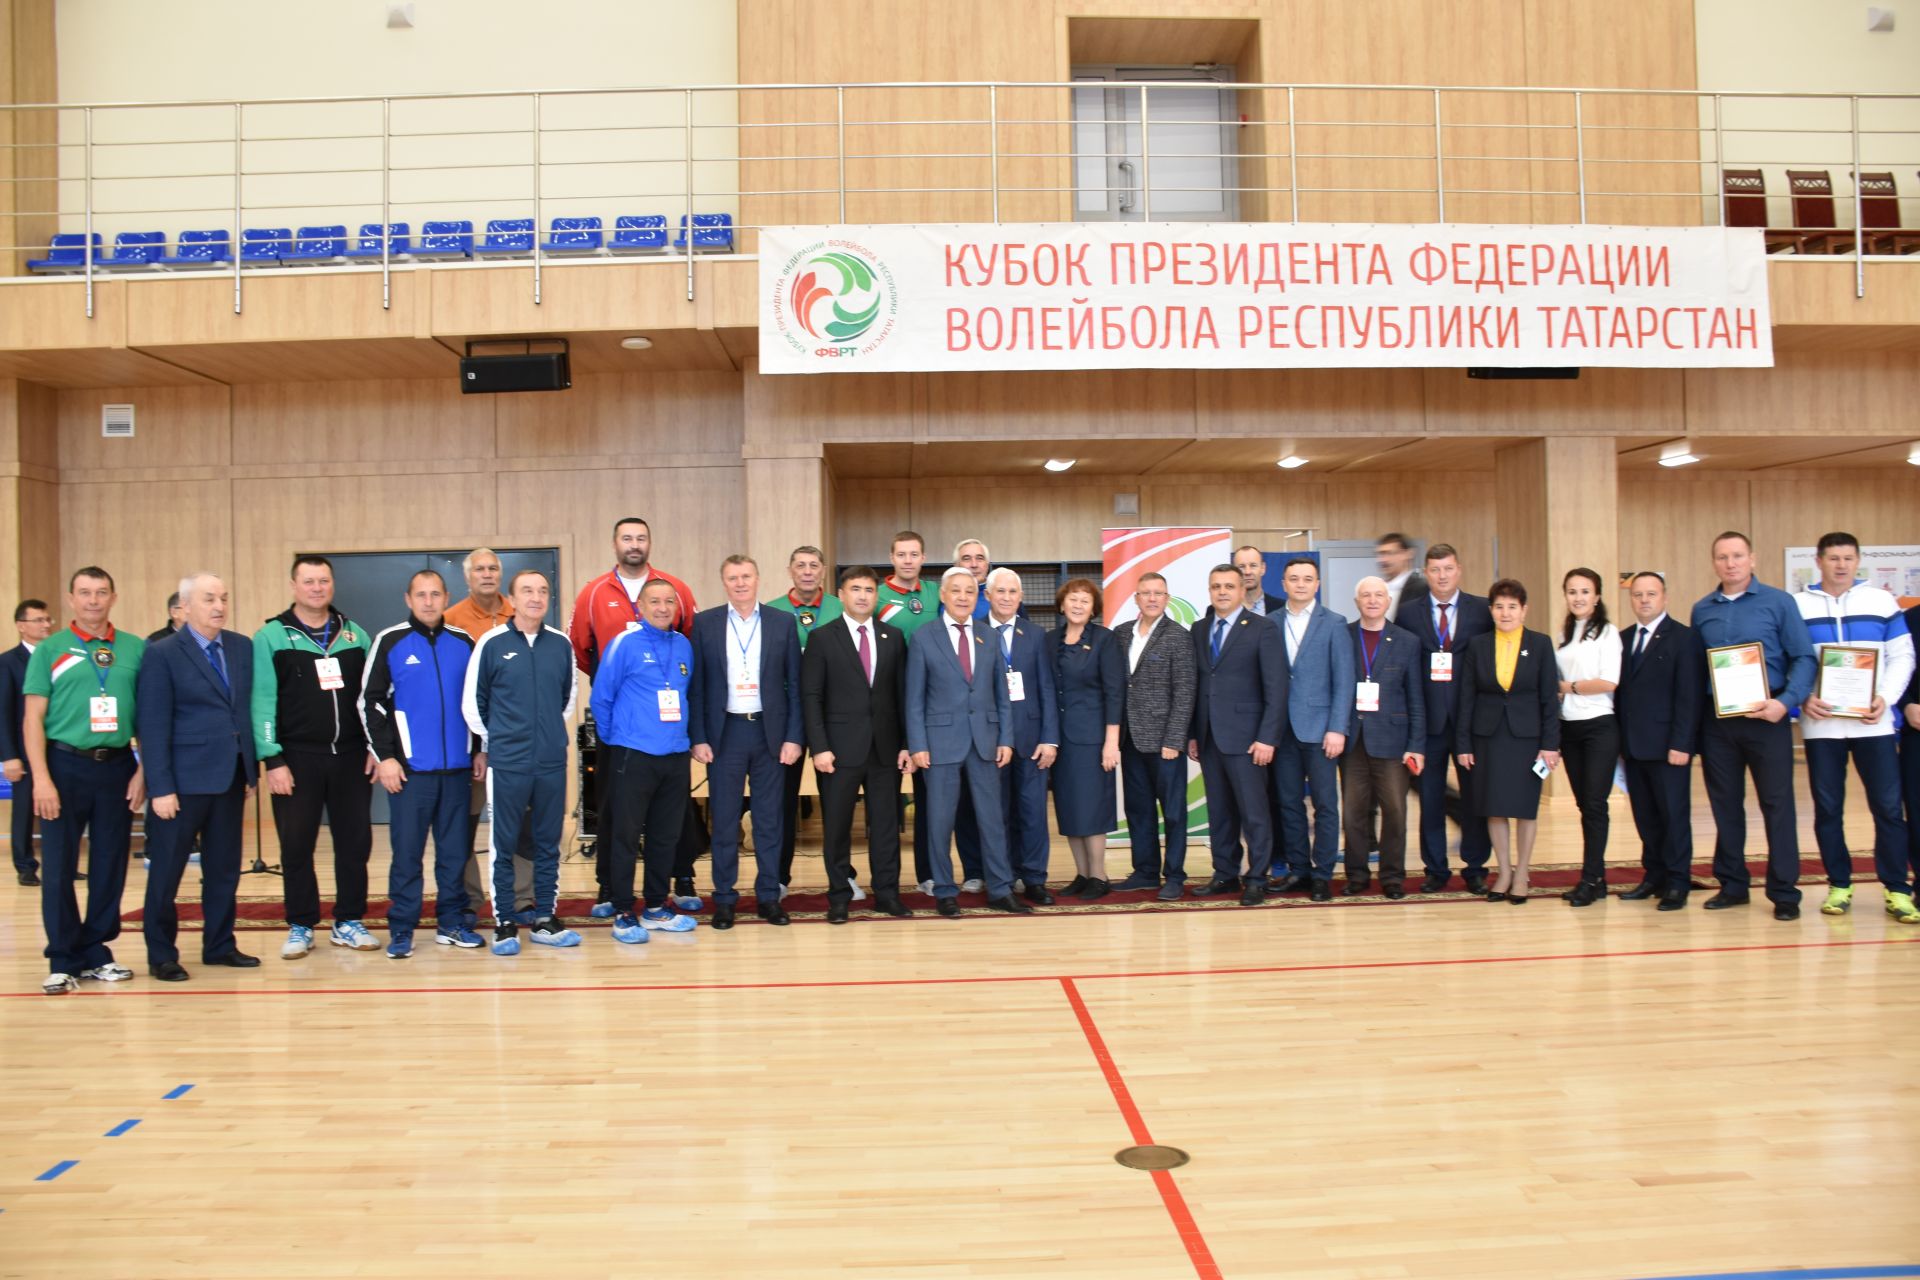 Фарид Мухаметшин открыл турнир на Кубок президента Федерации волейбола Татарстана